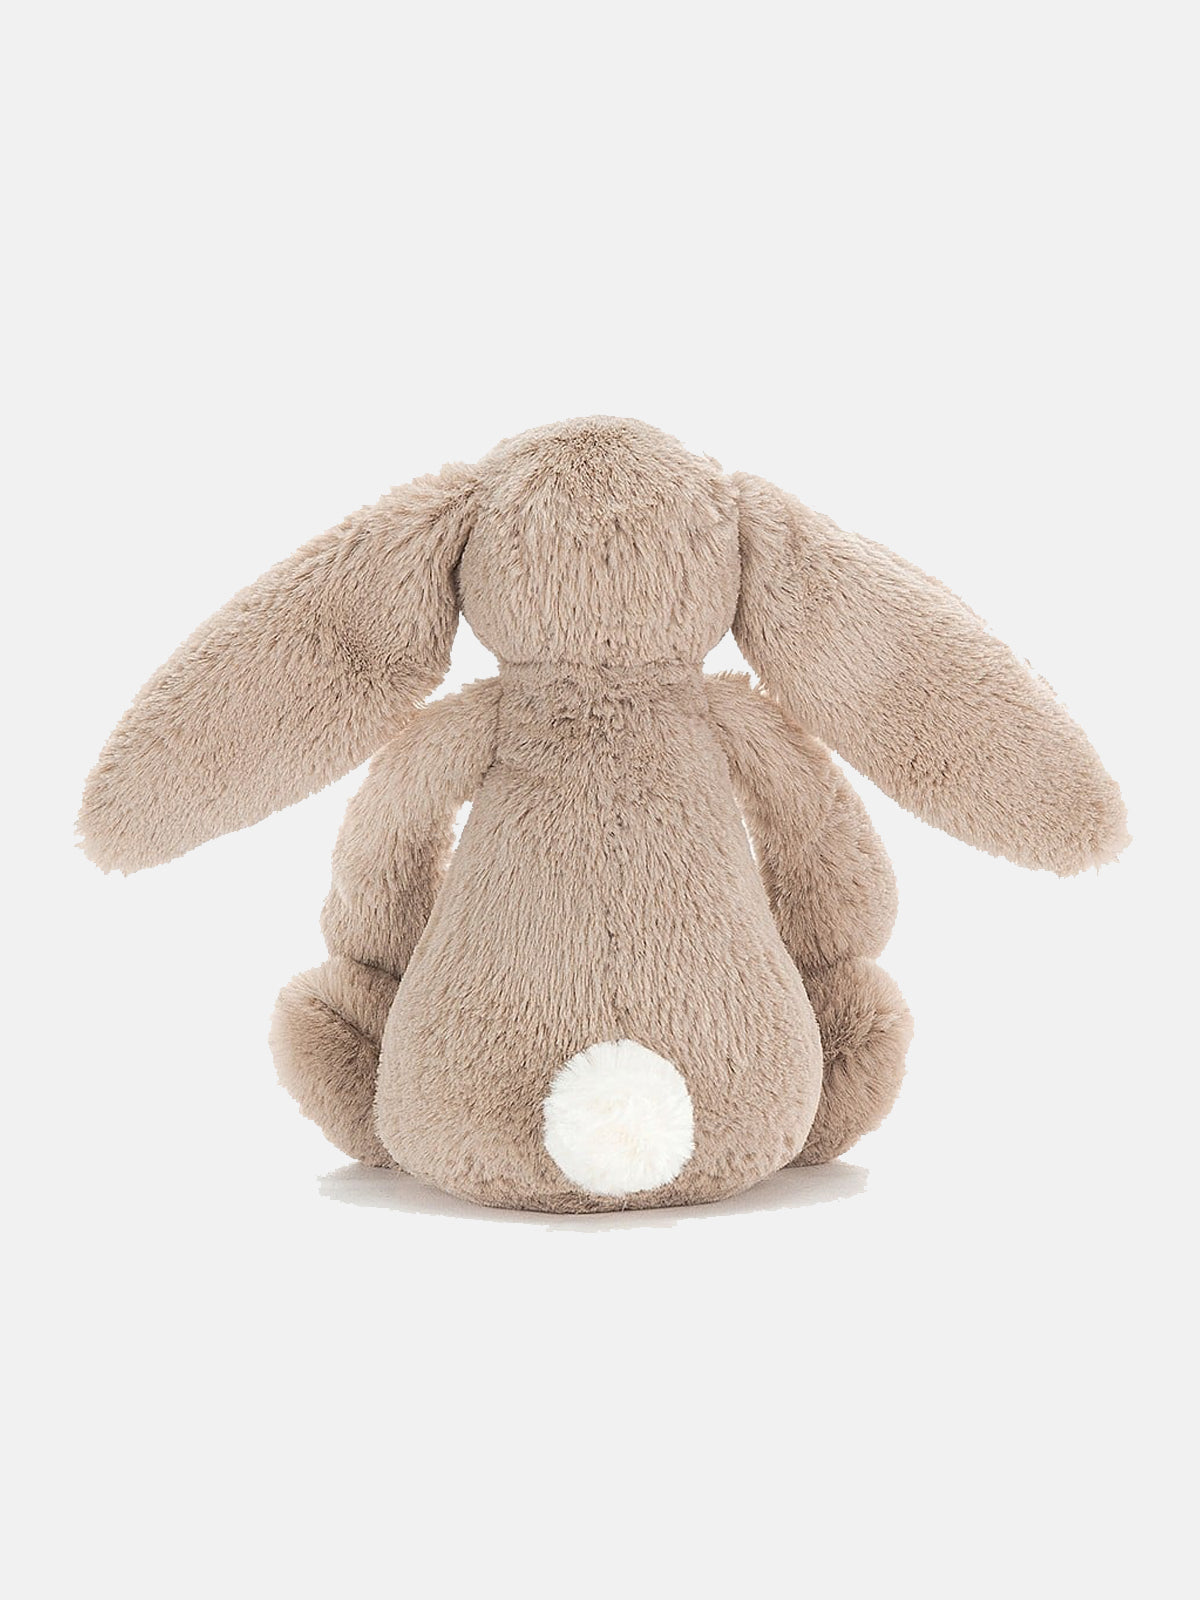 "Bashful" Beige Bunny Plush Toy